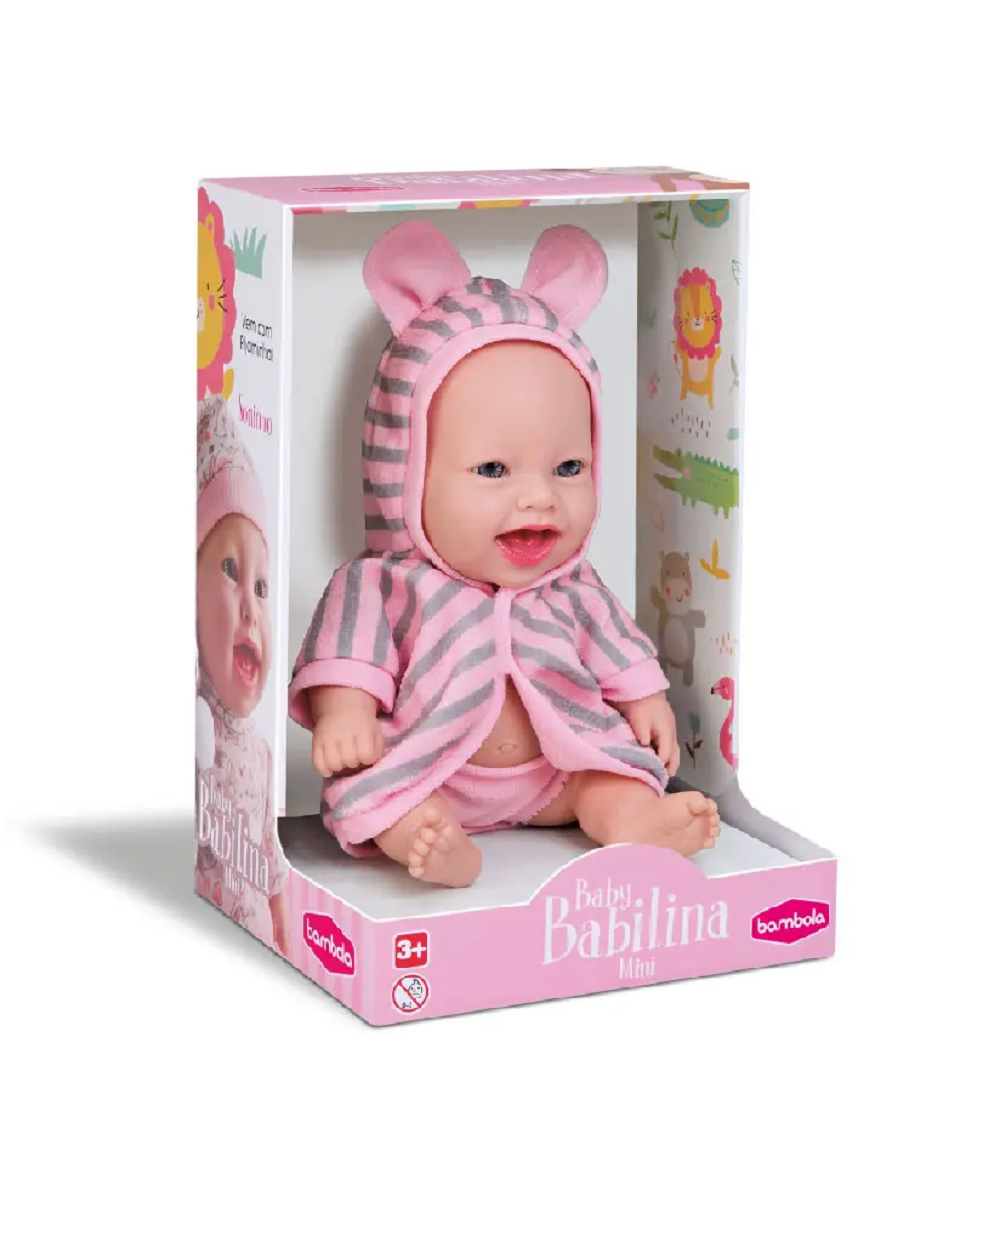 Boneca Baby Babilina Banho Mini 728 - BAMBOLA